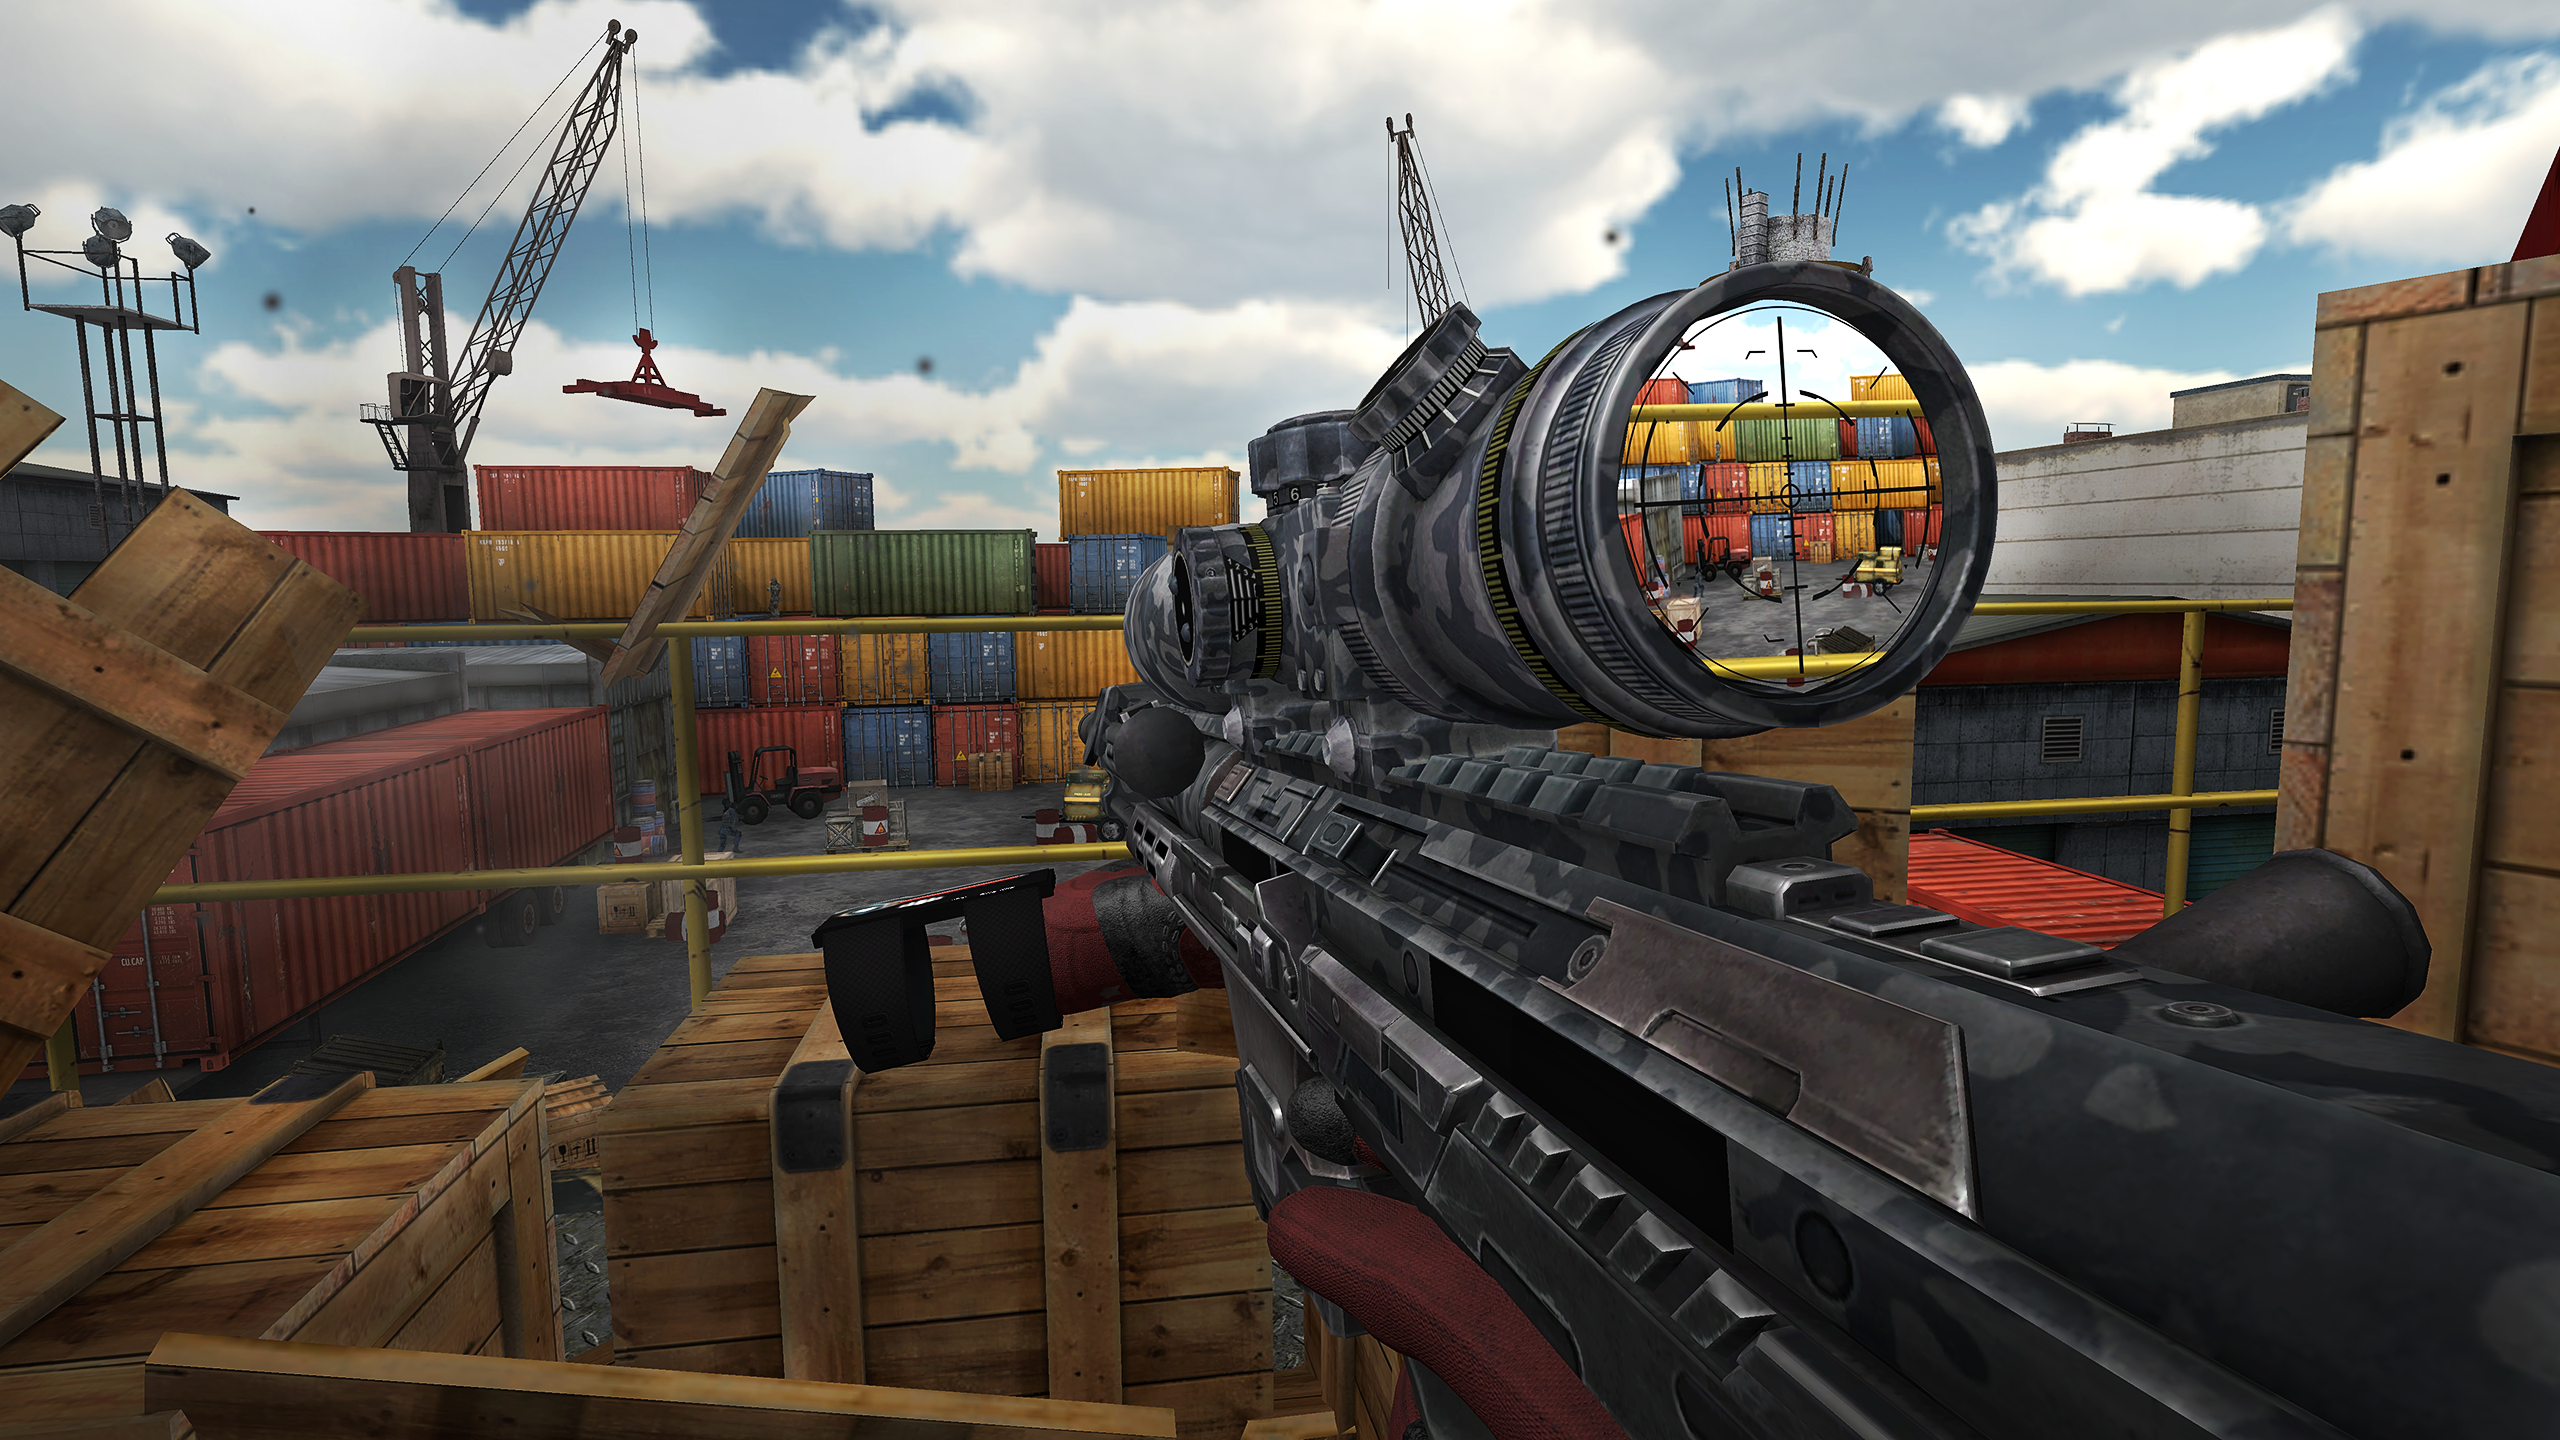 SniperRust VR screenshot 01 - Sniper Rust VR